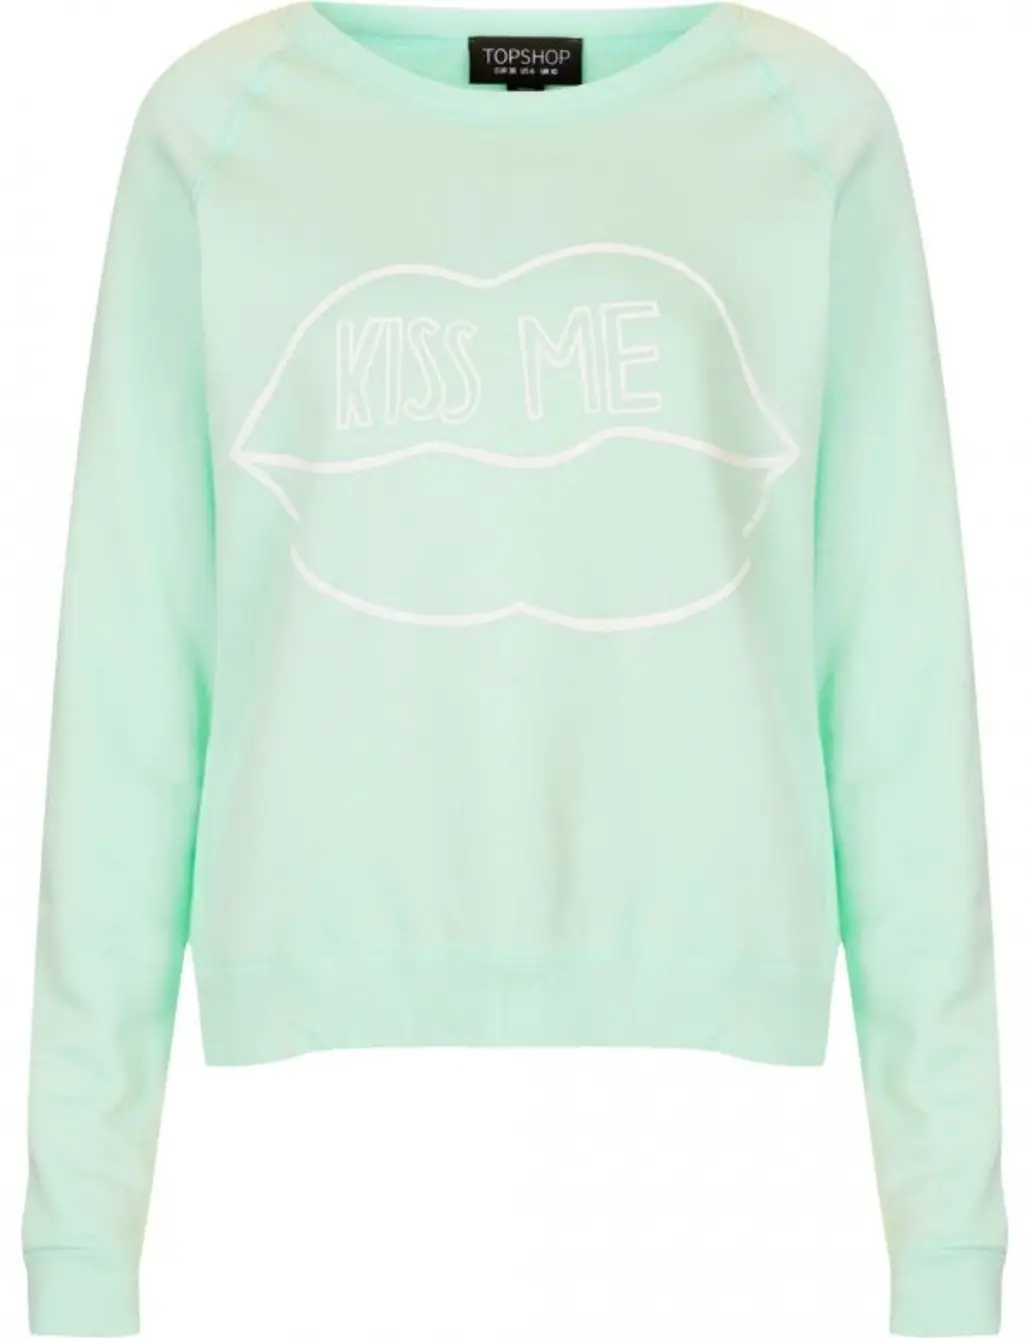 Topshop ‘Kiss Me’ Sweater